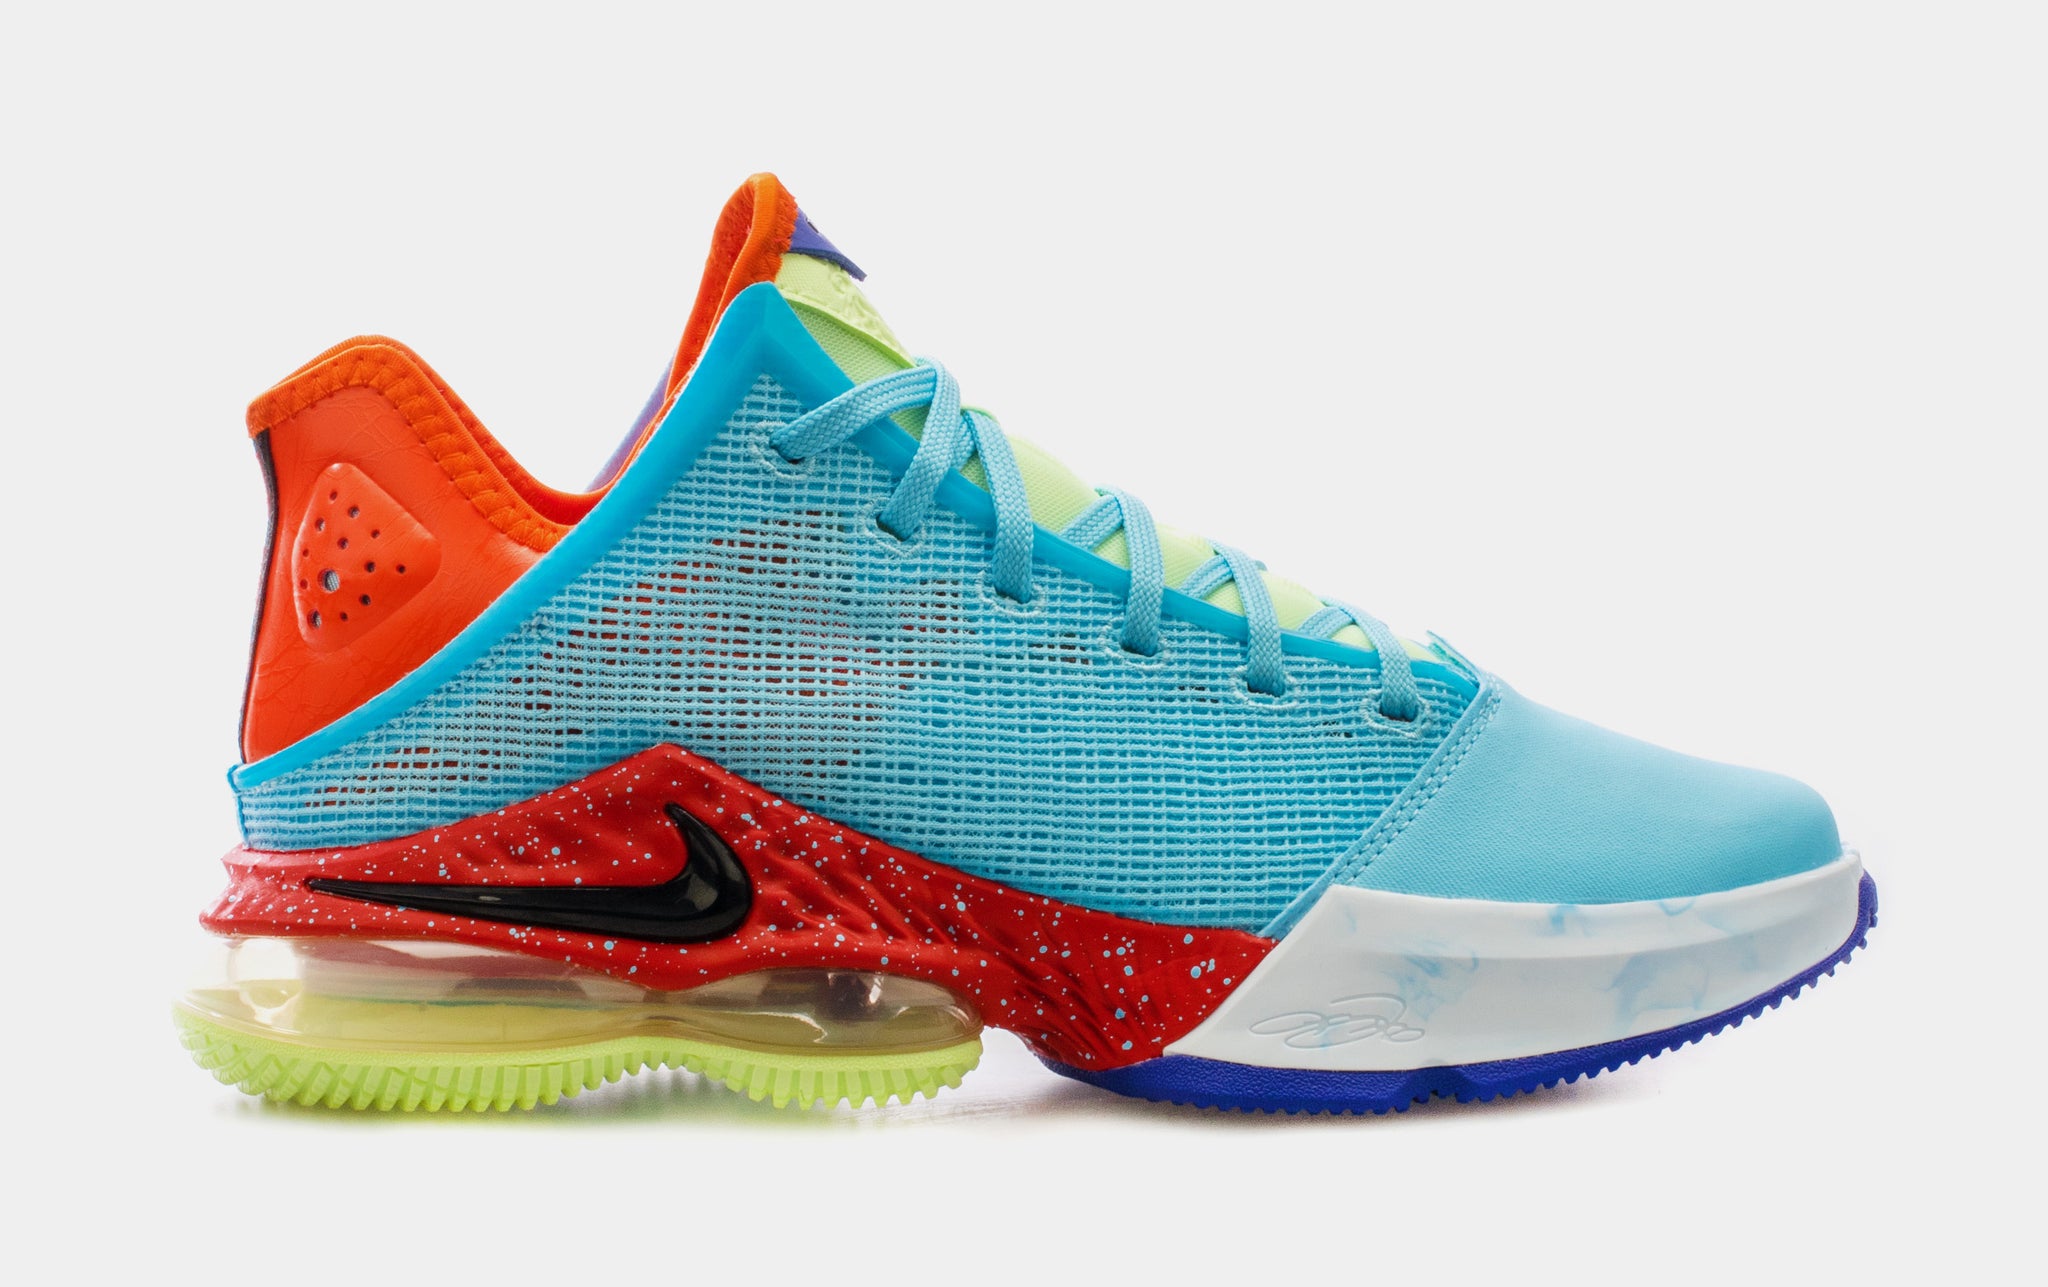 Nike LeBron 19 Basketball Shoes Size 9.5 (Blue)